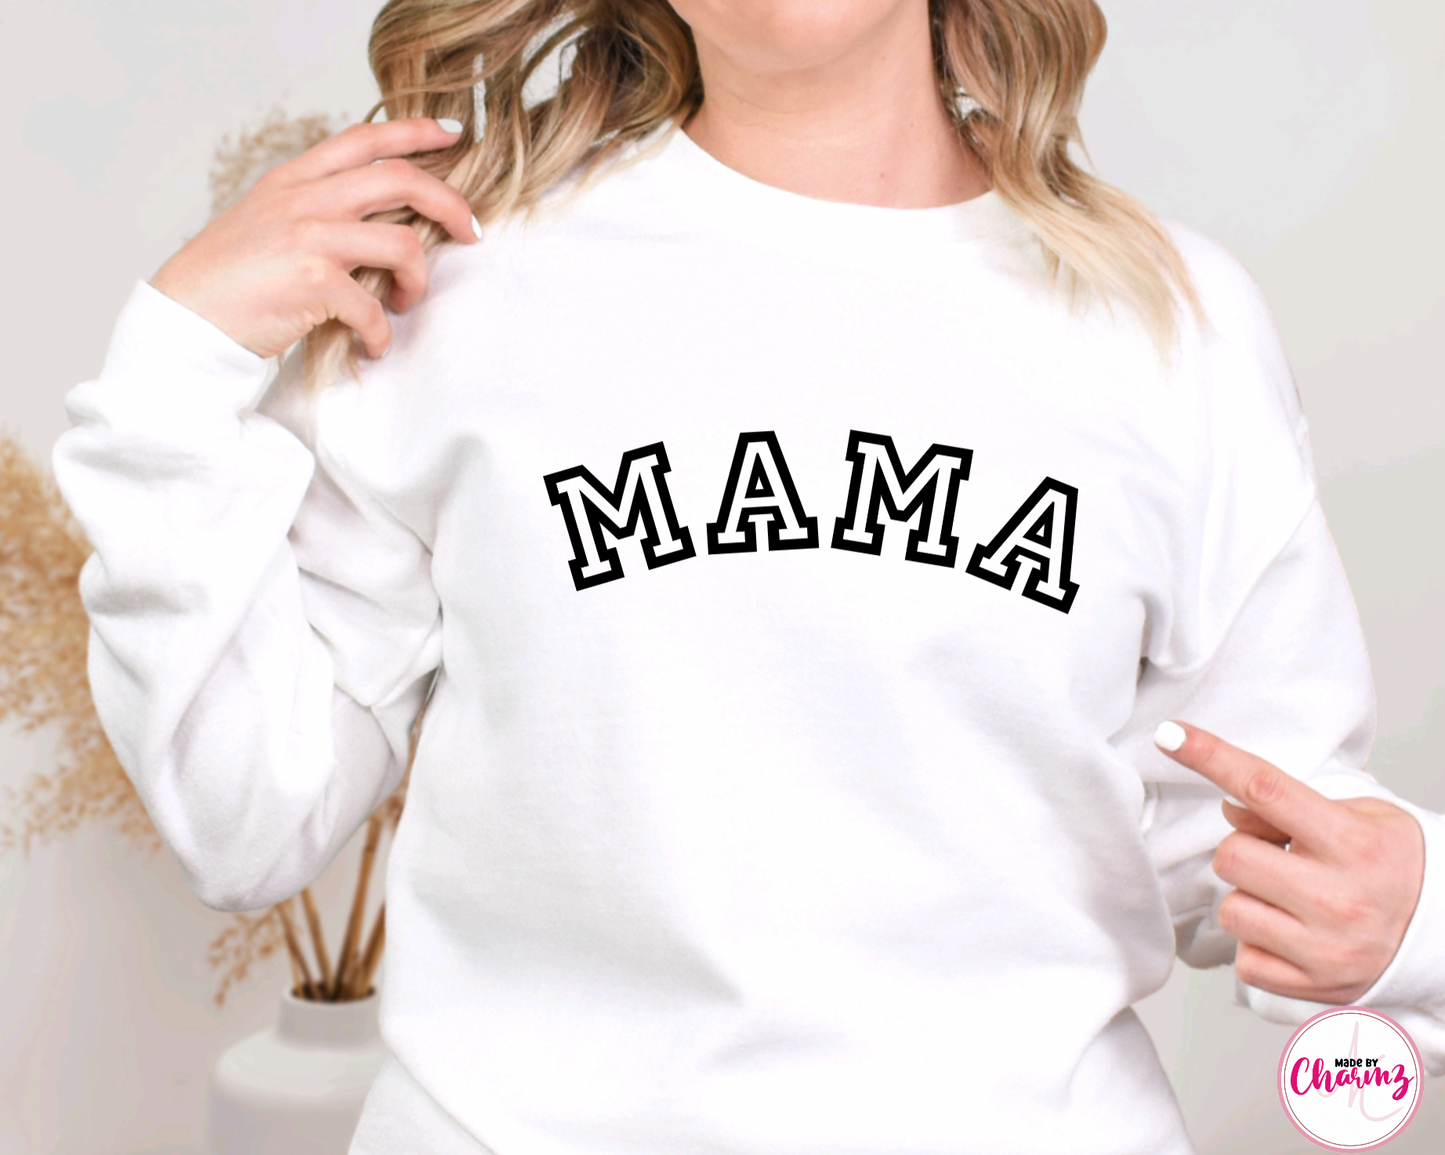 Mama/Mom Crewneck Sweater/Tees